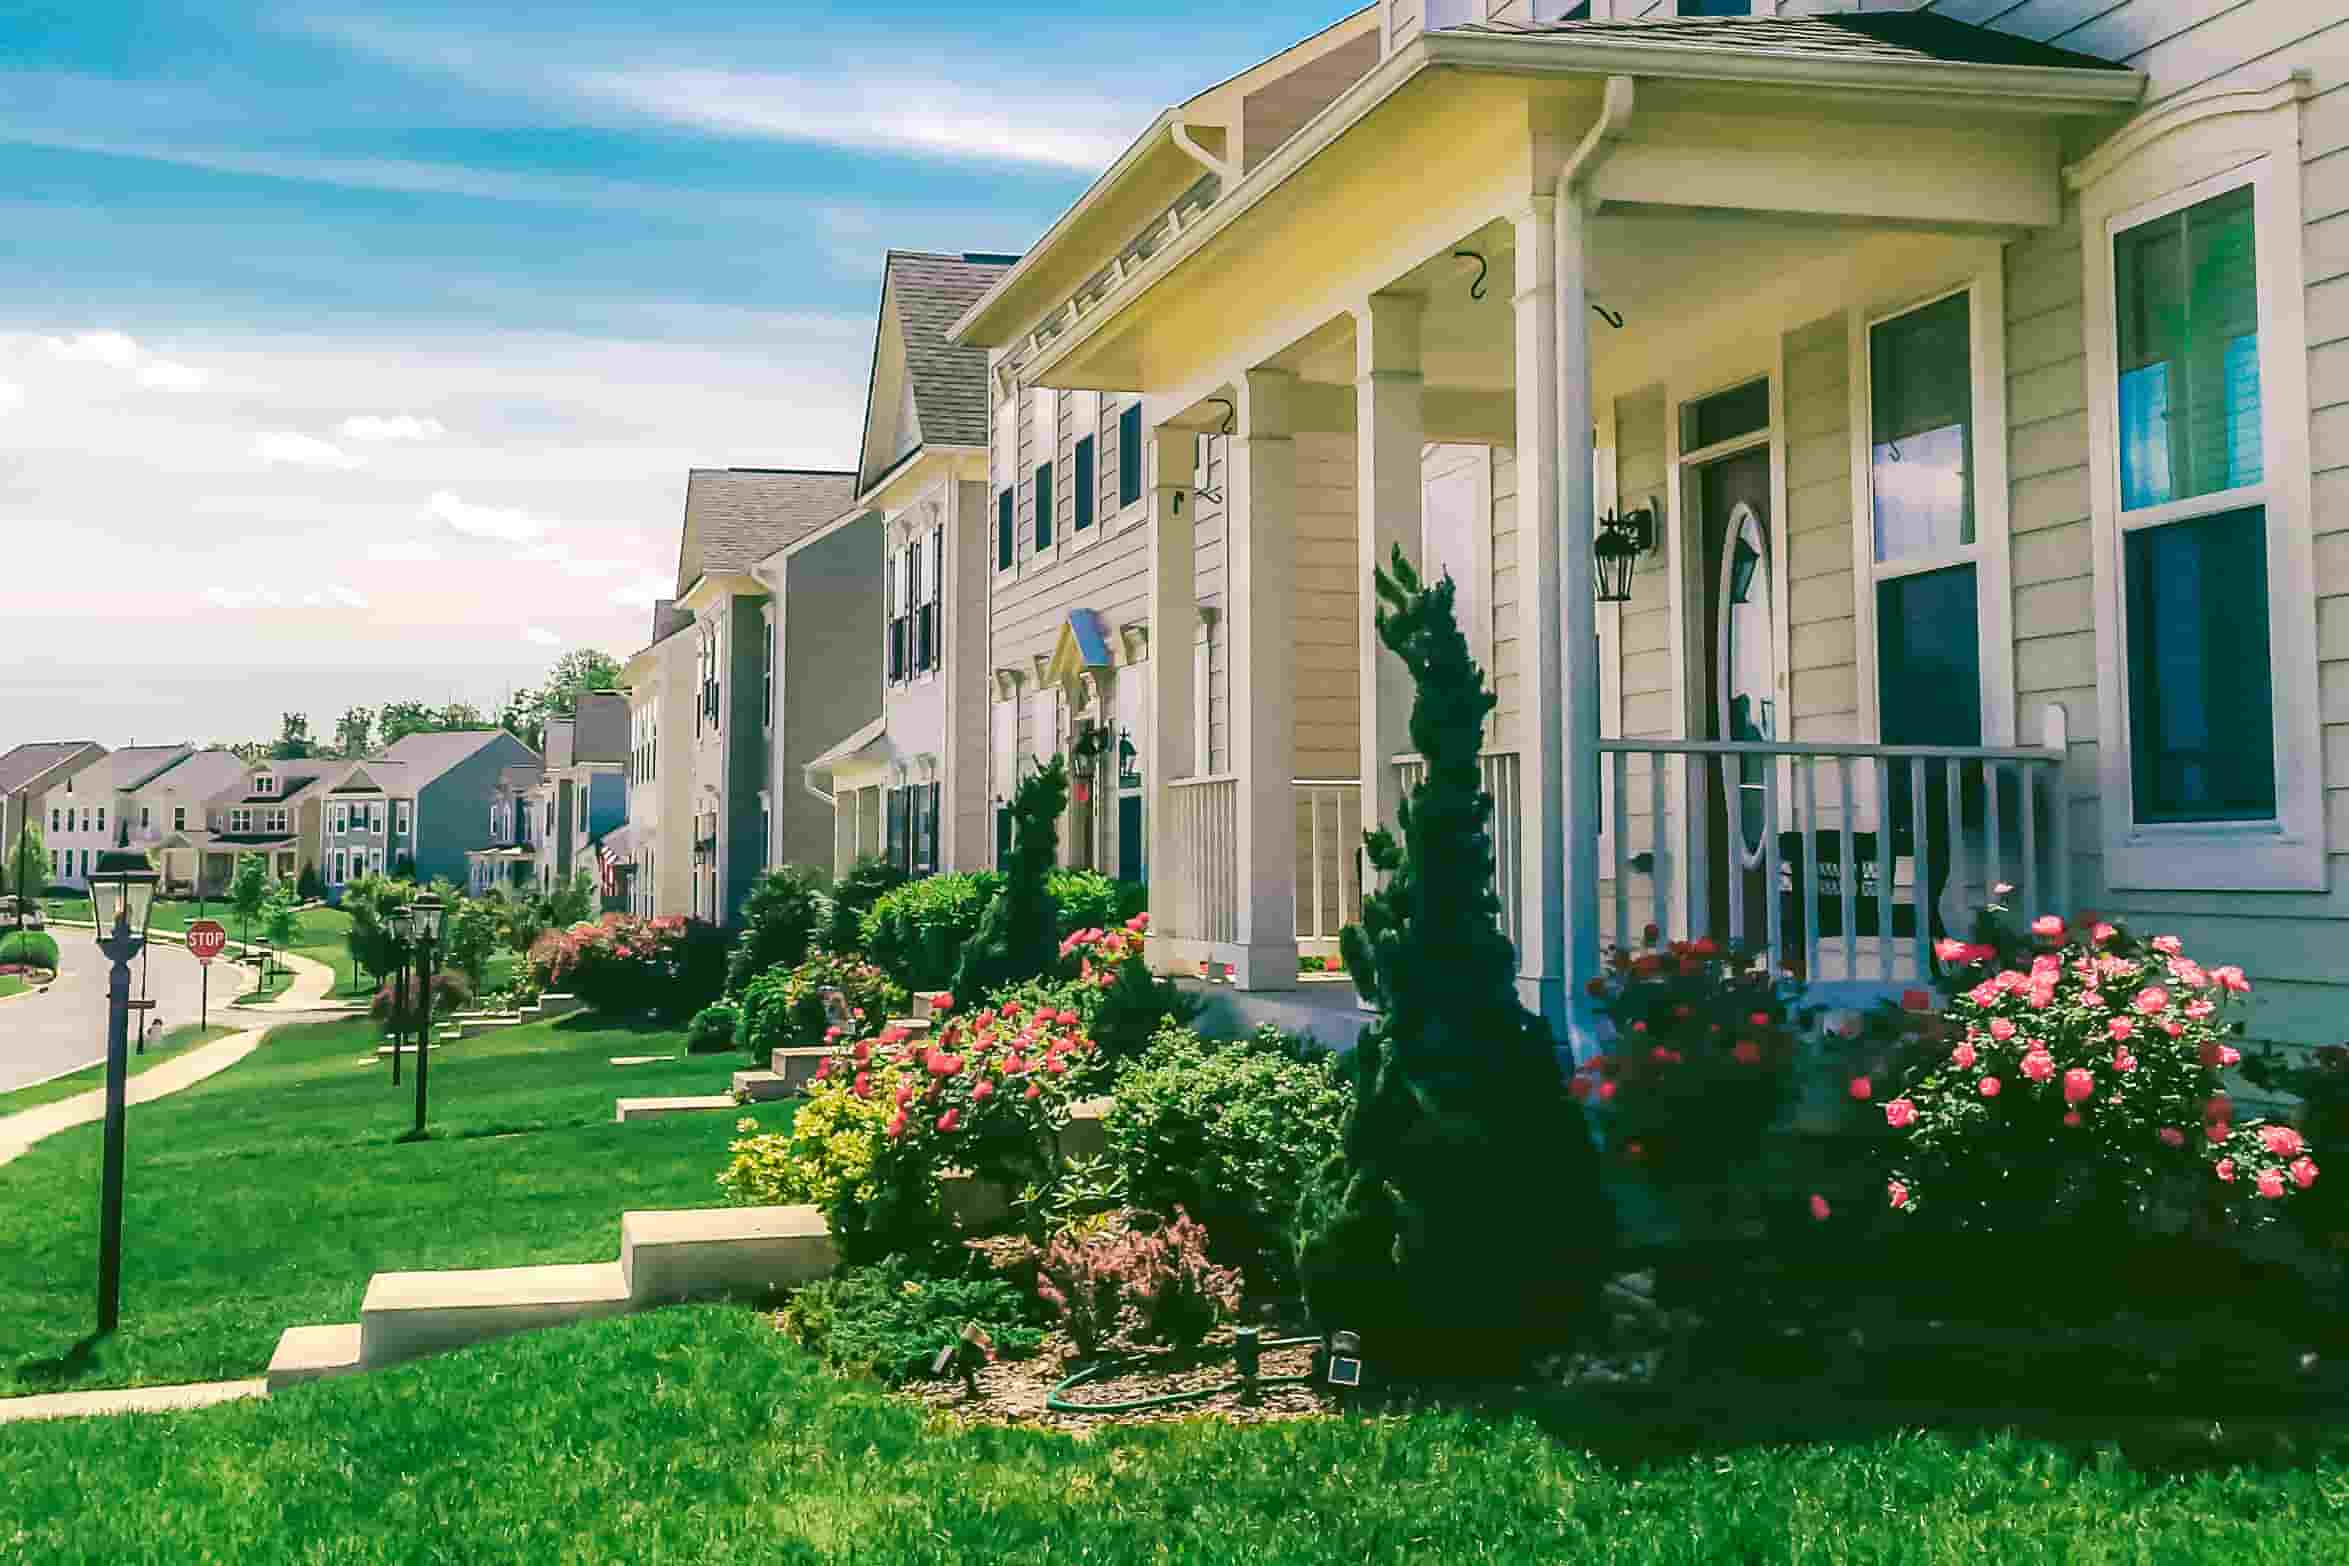 USA Rental Properties: Your Ideal Home Awaits